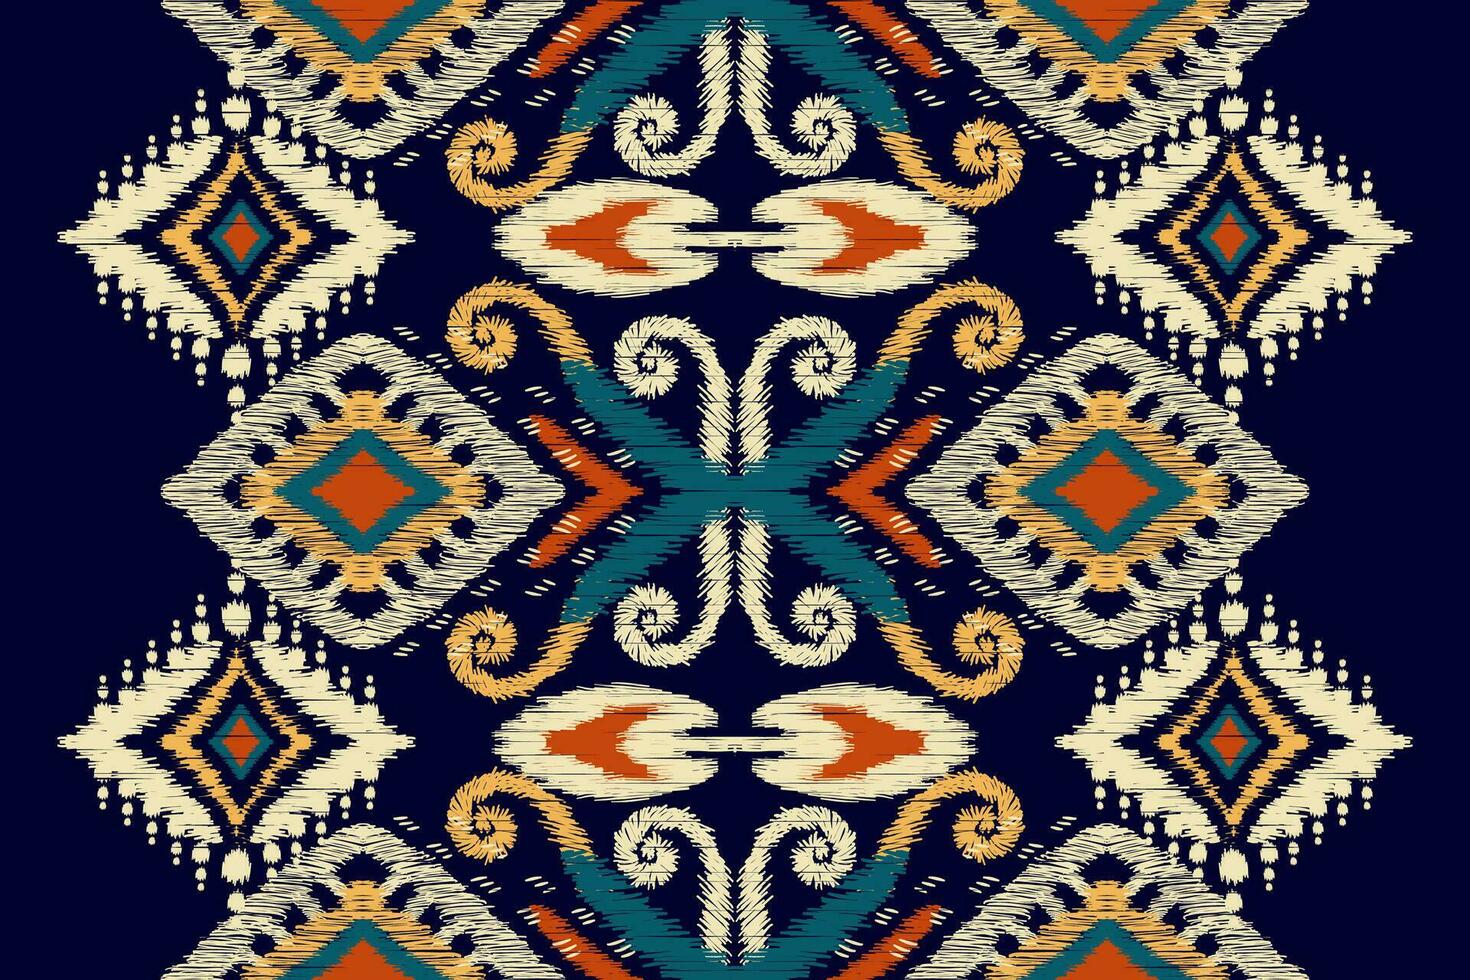 africano ikat floral cachemir bordado en oscuro púrpura fondo.ikat étnico oriental modelo tradicional.azteca estilo resumen vector ilustración.diseño para textura,tela,ropa,envoltura,bufanda.